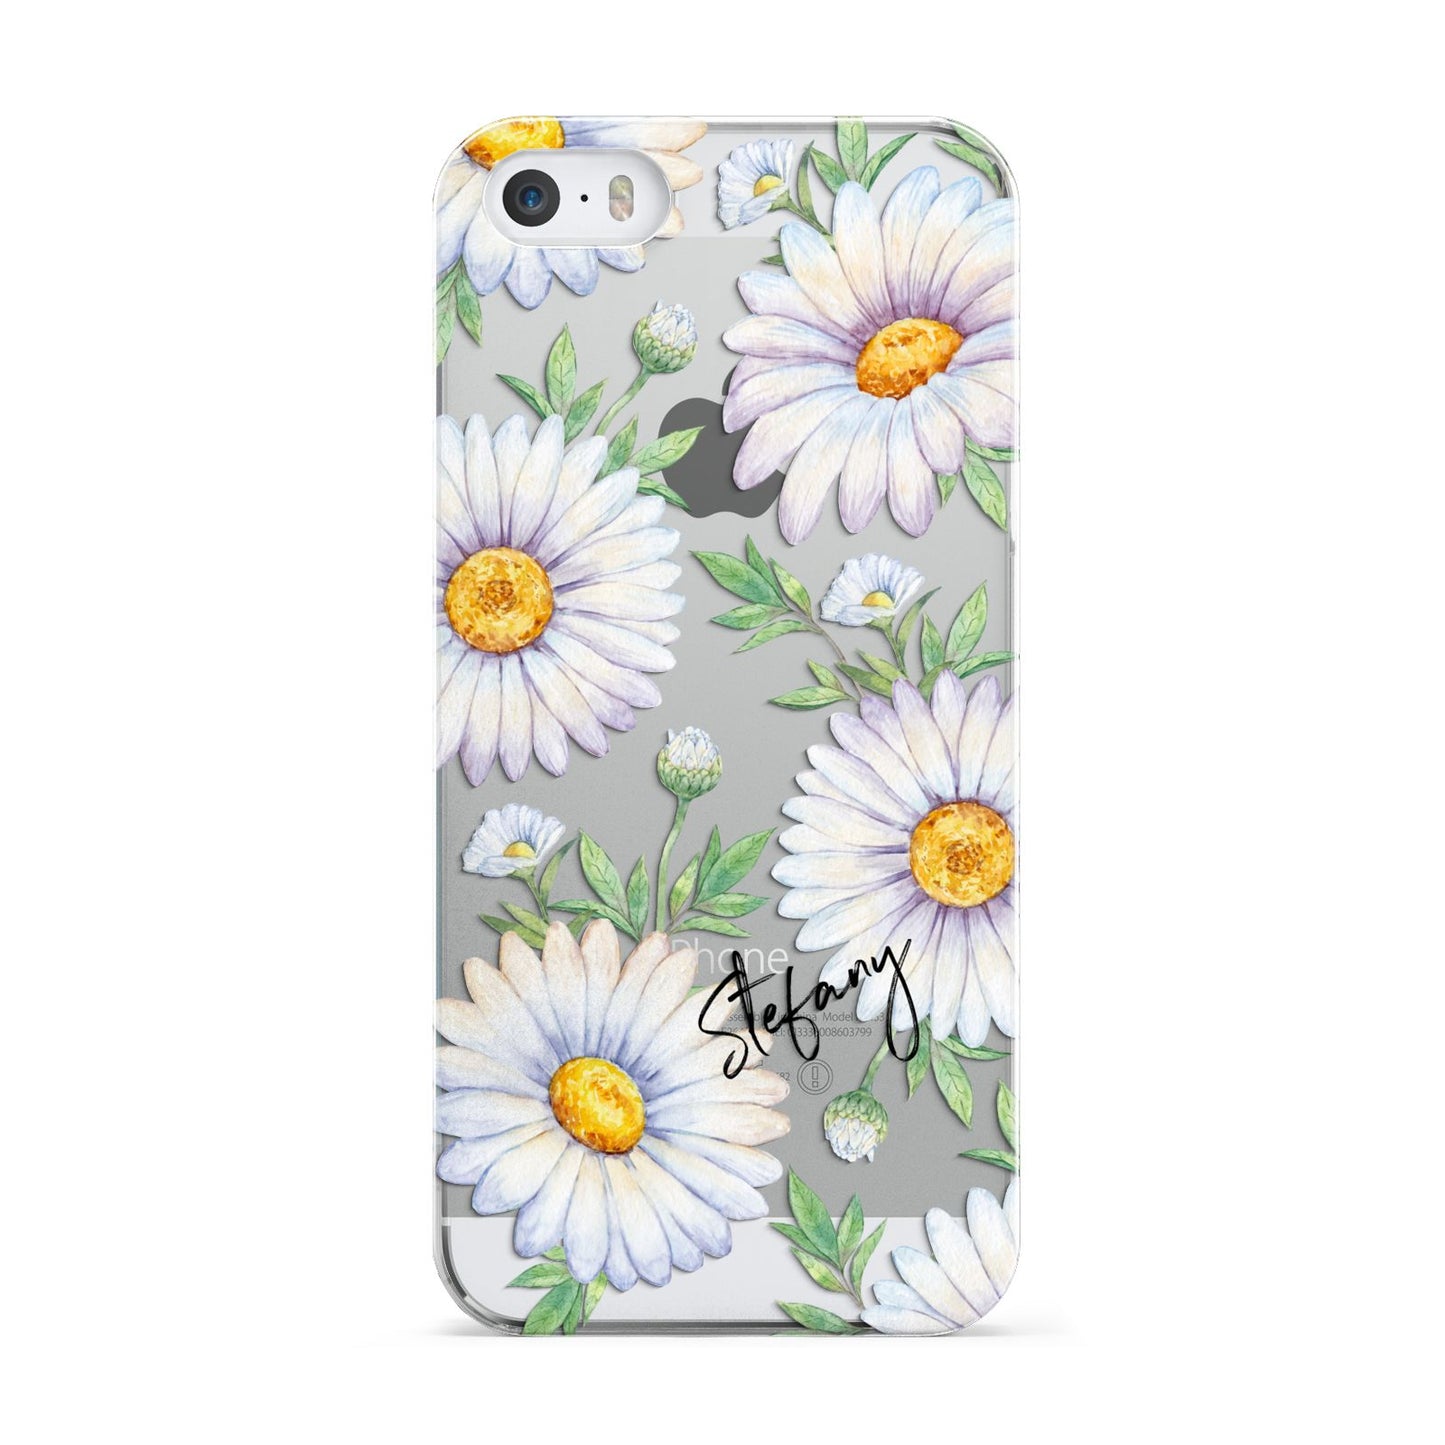 Personalised White Daisy Apple iPhone 5 Case